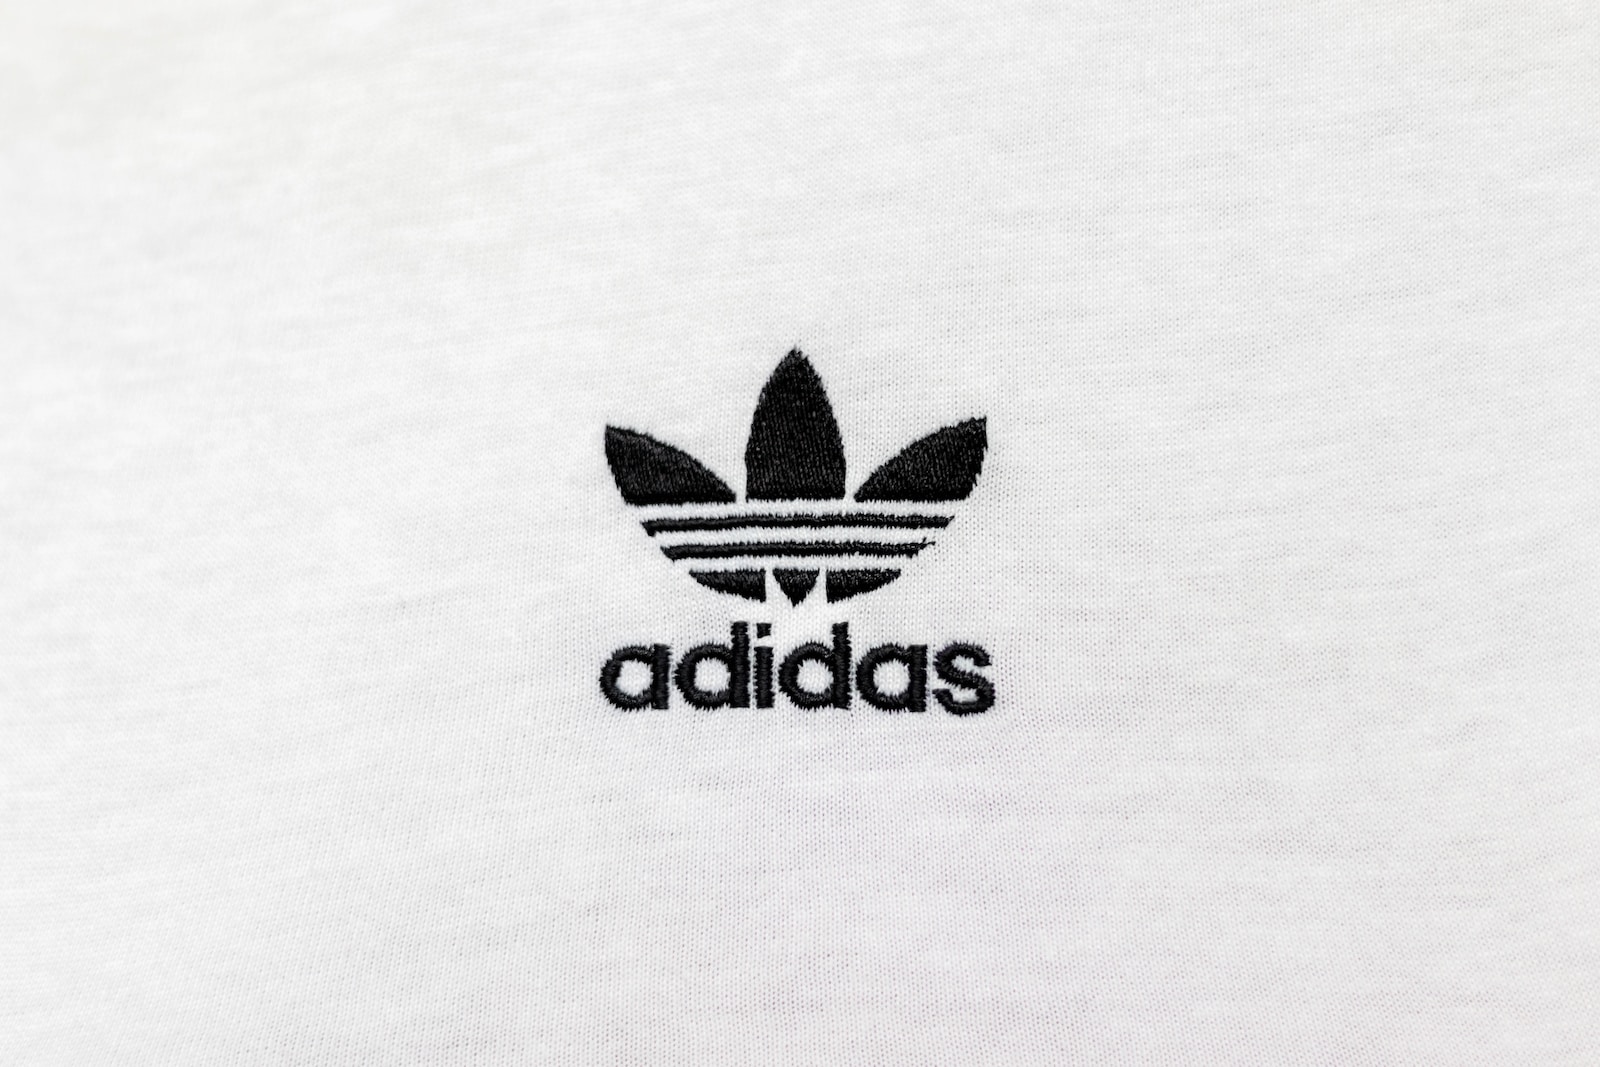 Is Adidas a Designer Brand?, Adidas logo